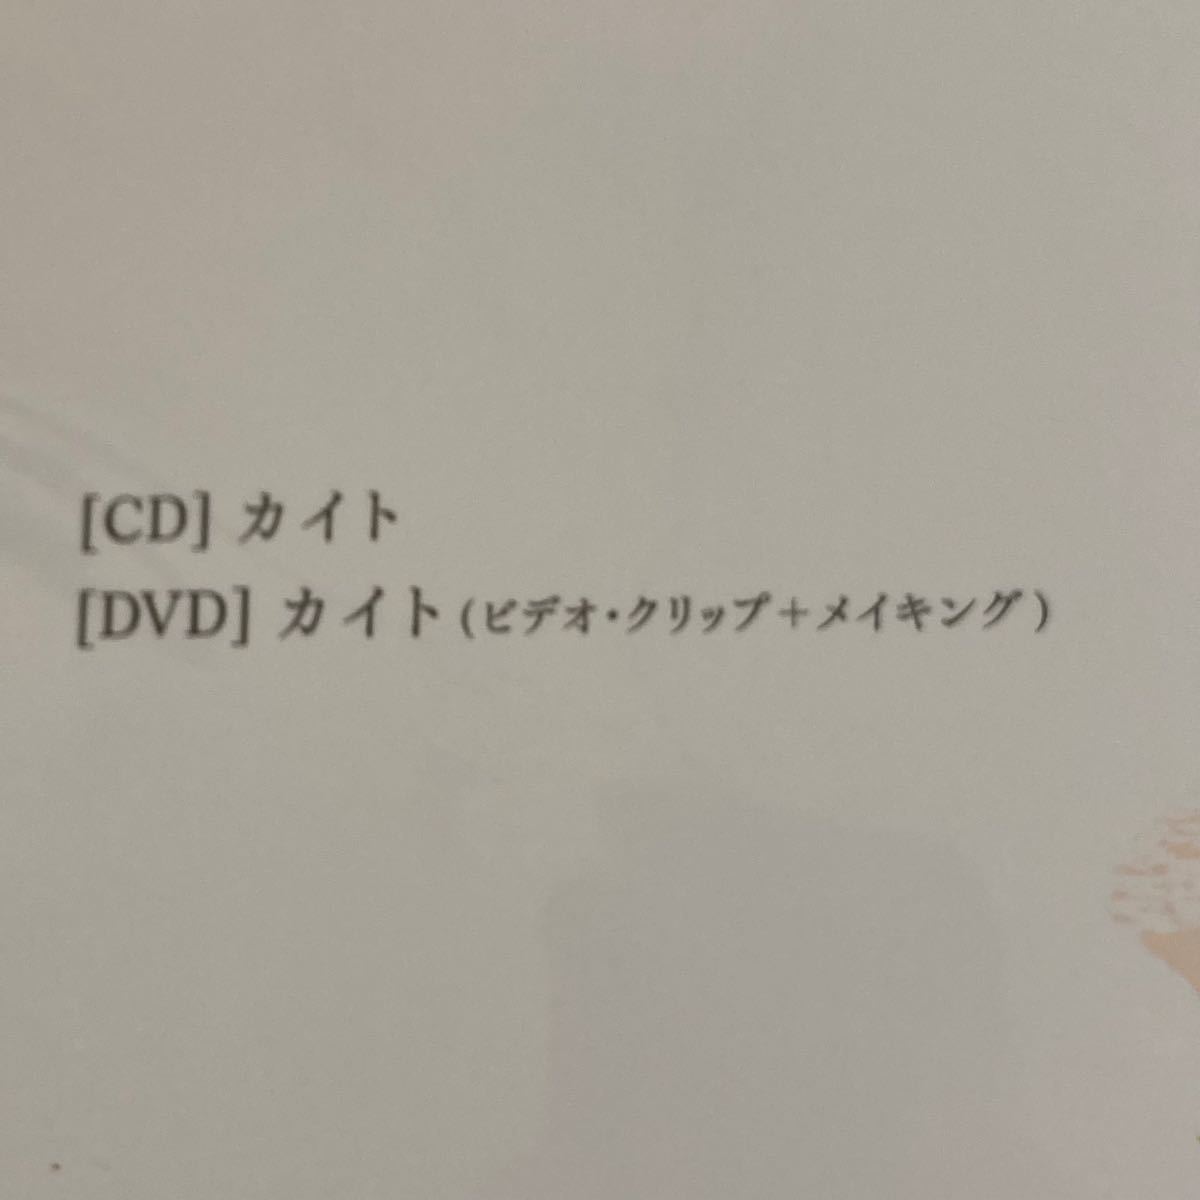 This is 嵐 初回限定【CD+DVD】 / カイト初回限定【CD+DVD】